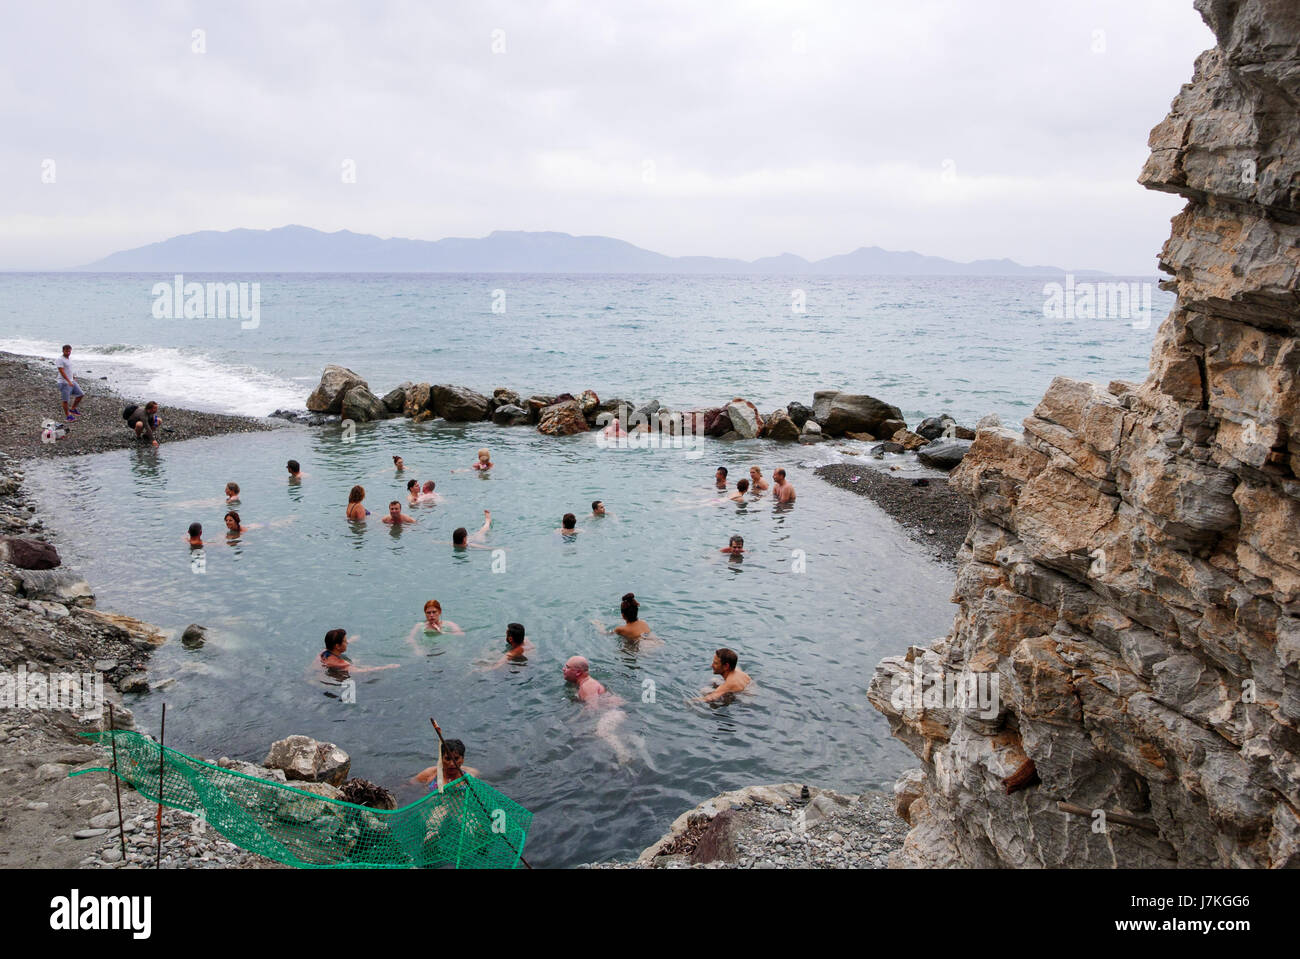 Greece, Kos Embros Thermae, 08 May 2017: People take a health bathwater at Kos Thermal Springs. Stock Photo